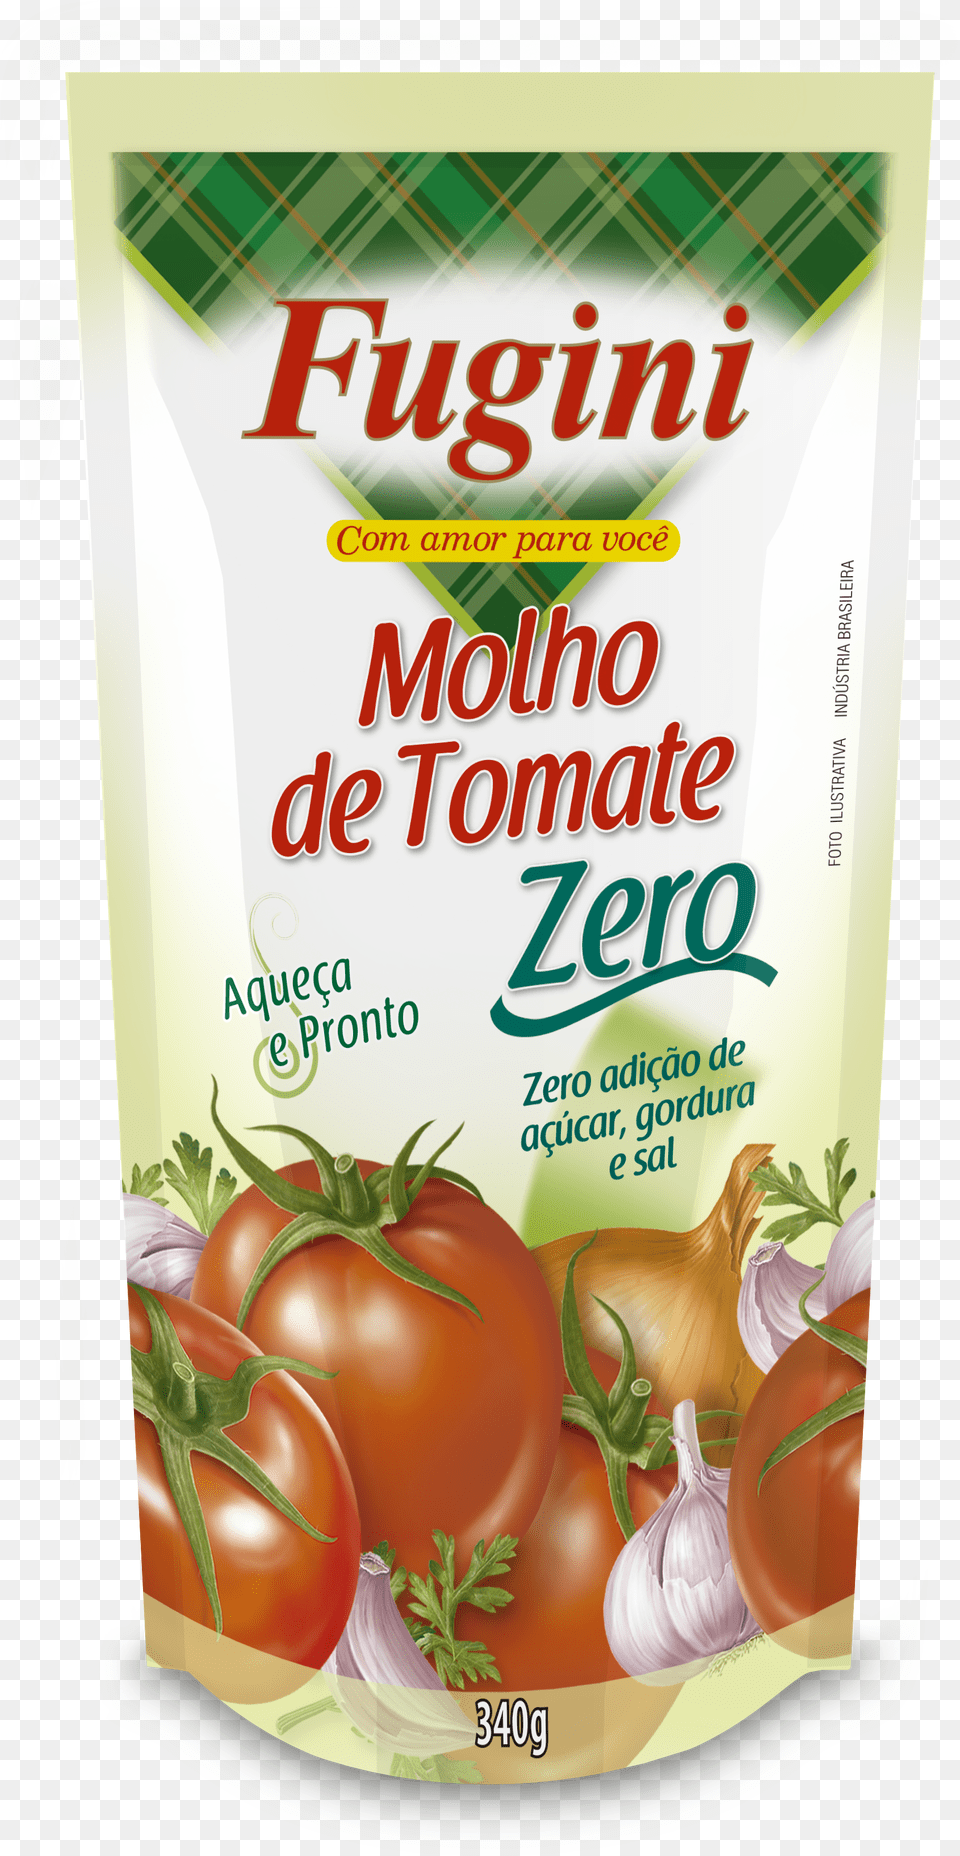 Molho De Tomate Zero Fugini Molho De Tomate Sache, Advertisement, Food, Plant, Produce Png Image